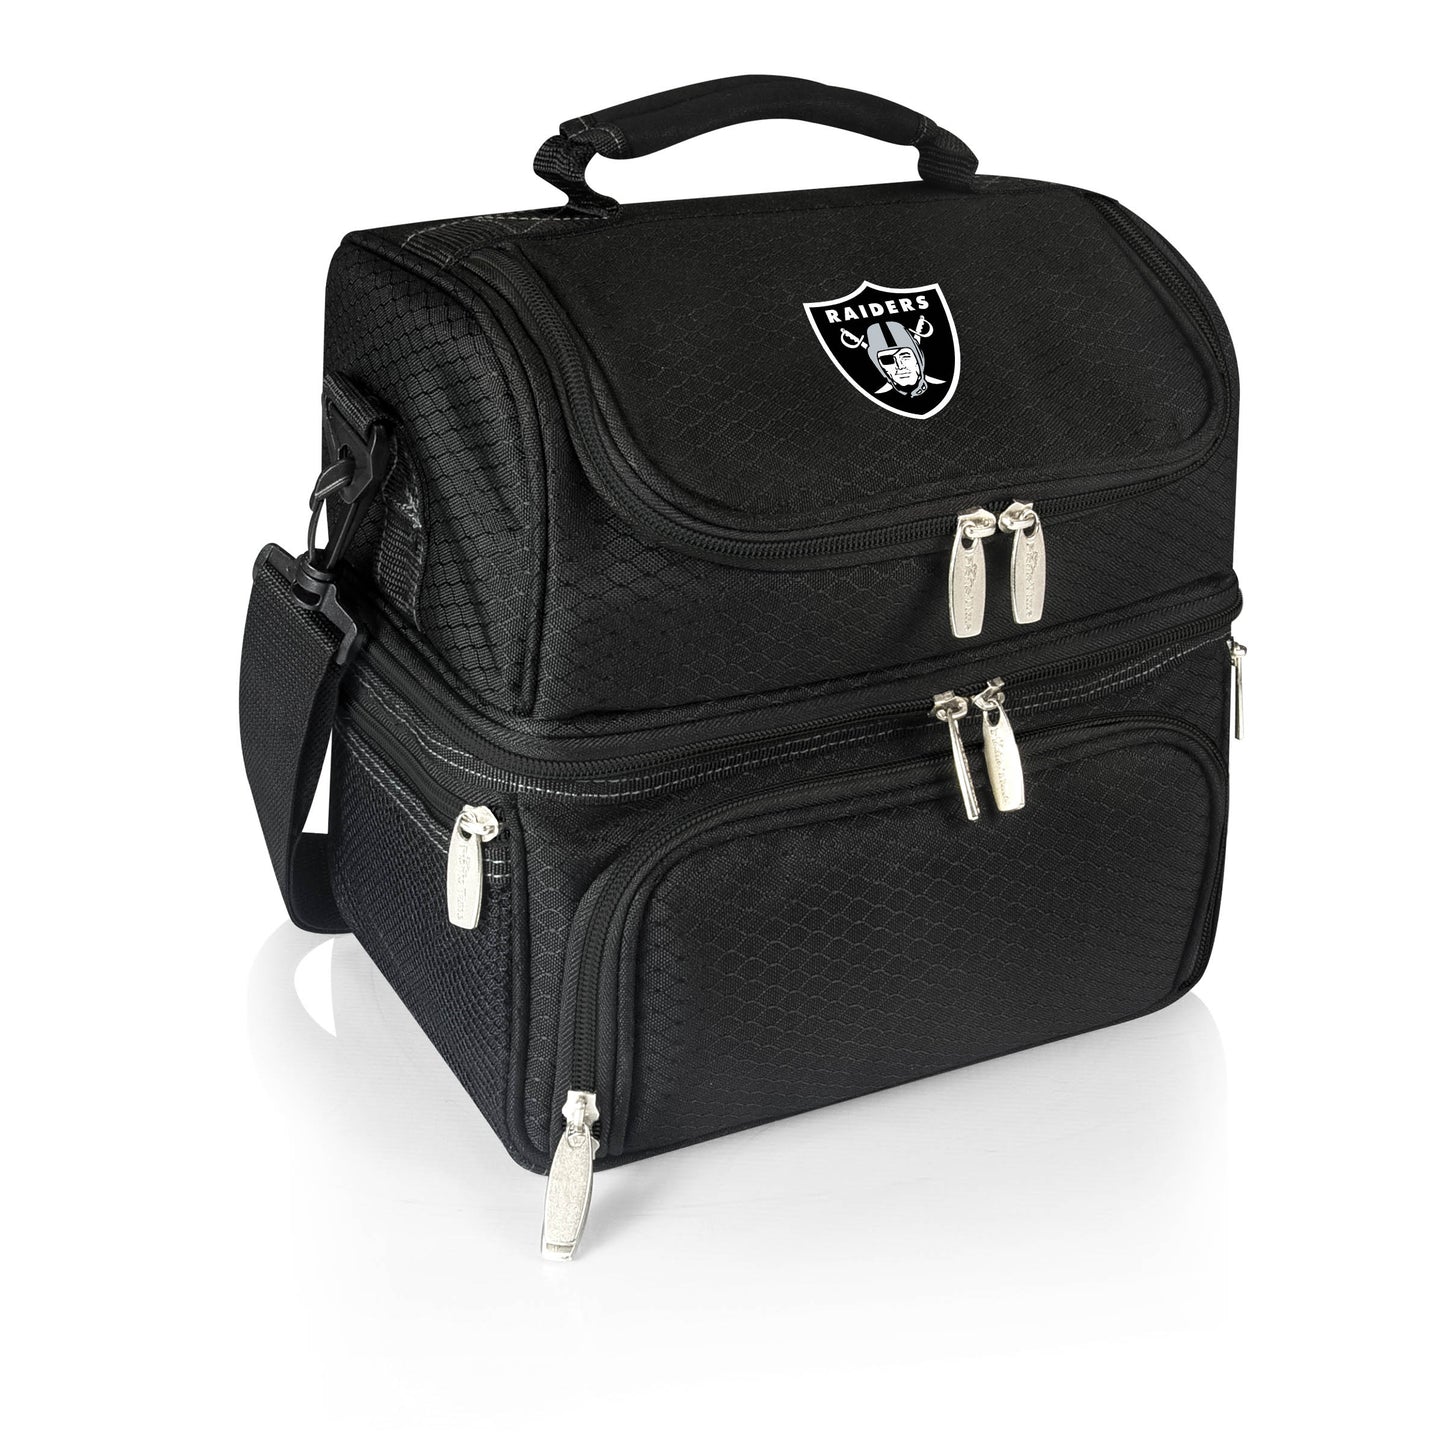 Las Vegas Raiders Pranzo Lunch Cooler Bag, (Black)